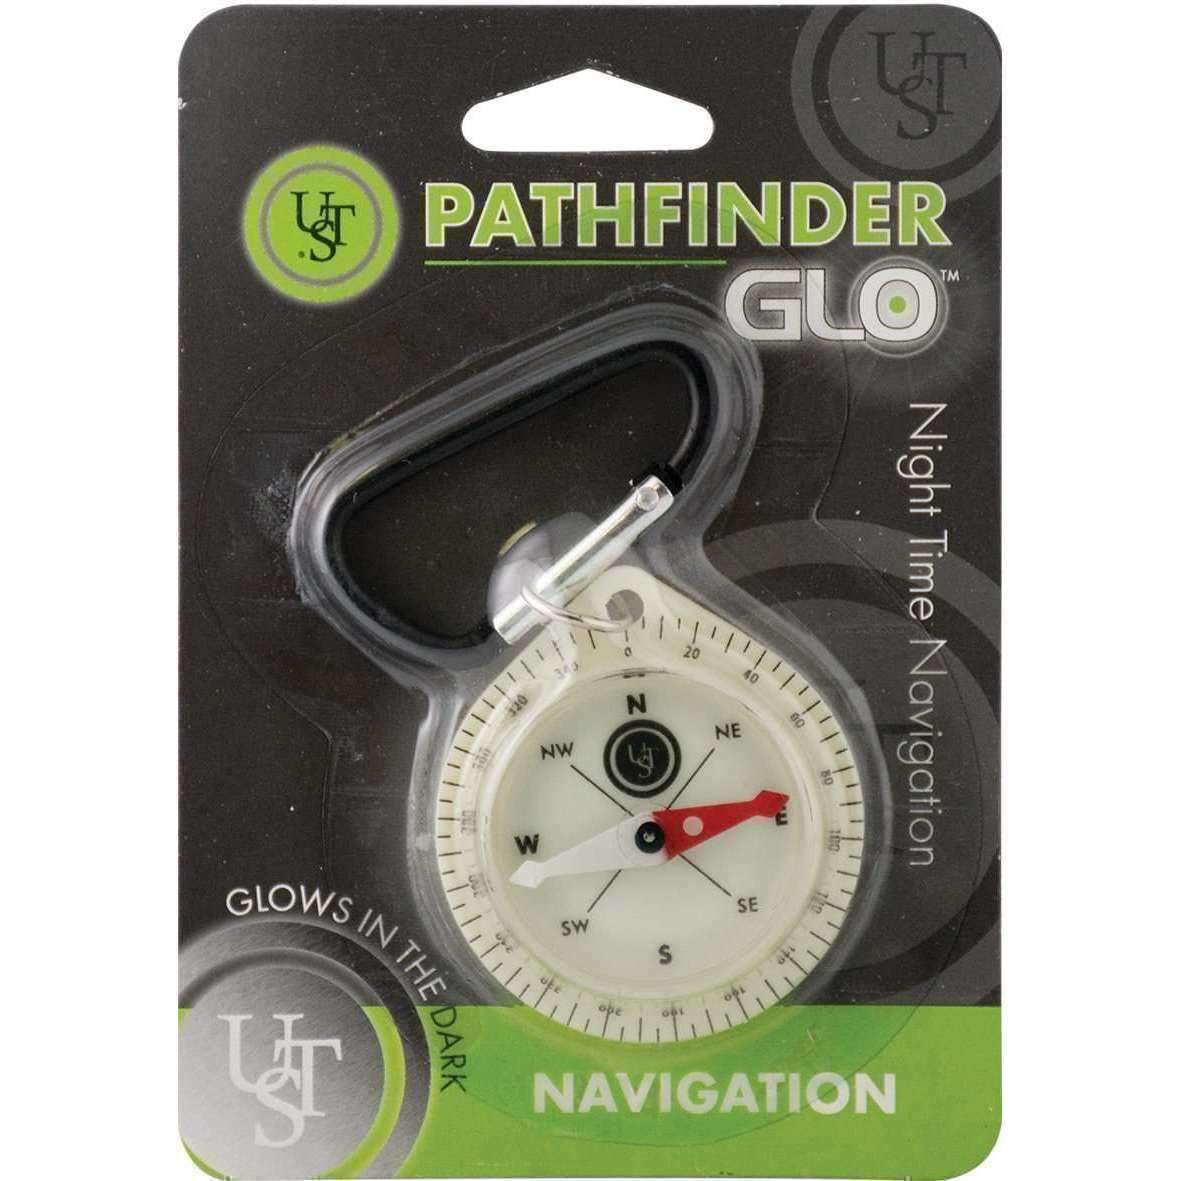 U.S.T U.S.T. Pathfinder GLO Compass Compasses  Wylies Outdoor World wylies-outdoor-world.myshopify.com